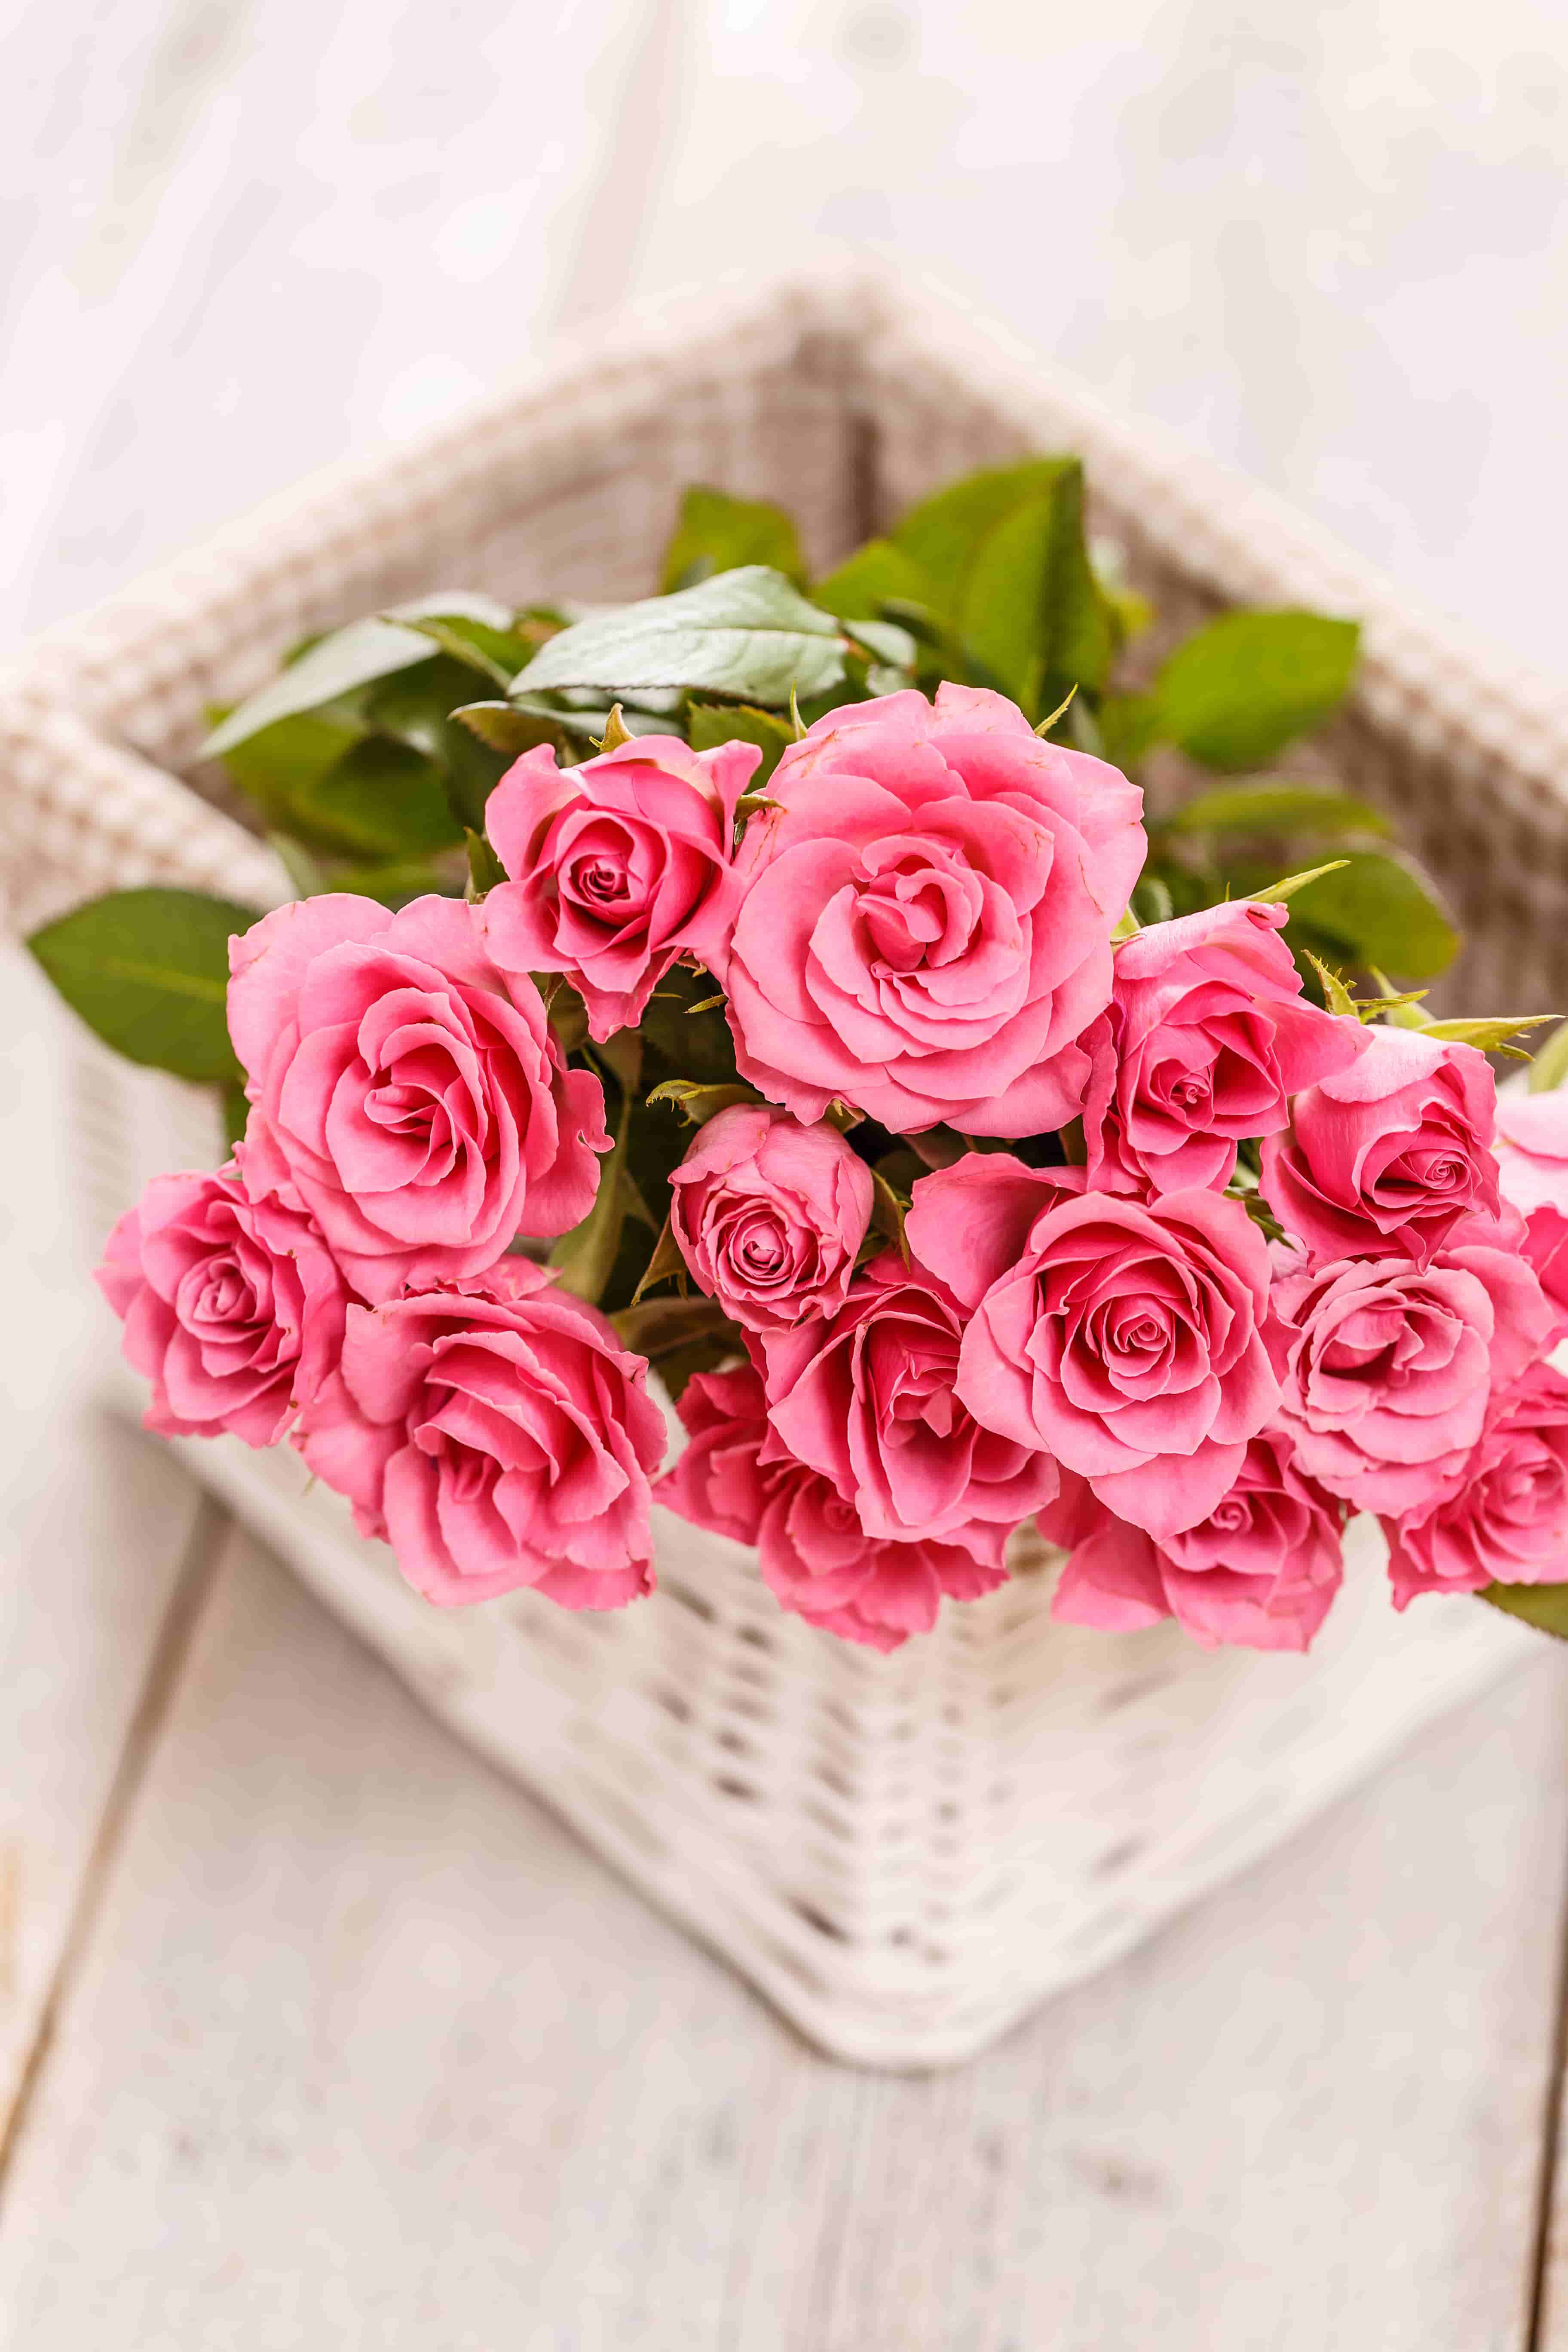 Pink rose in basket image